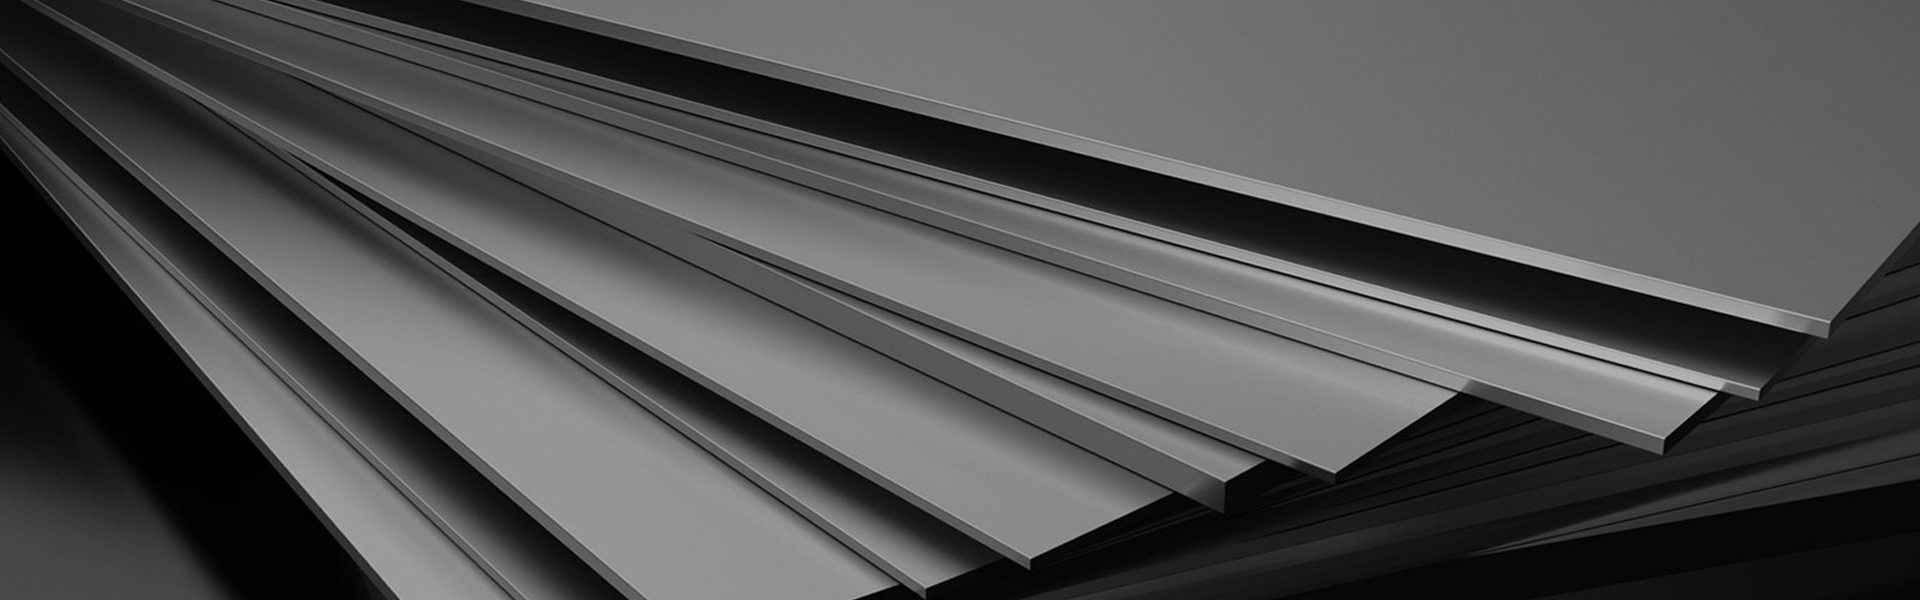 Stainless Steel Plates Manufacturer Supplier